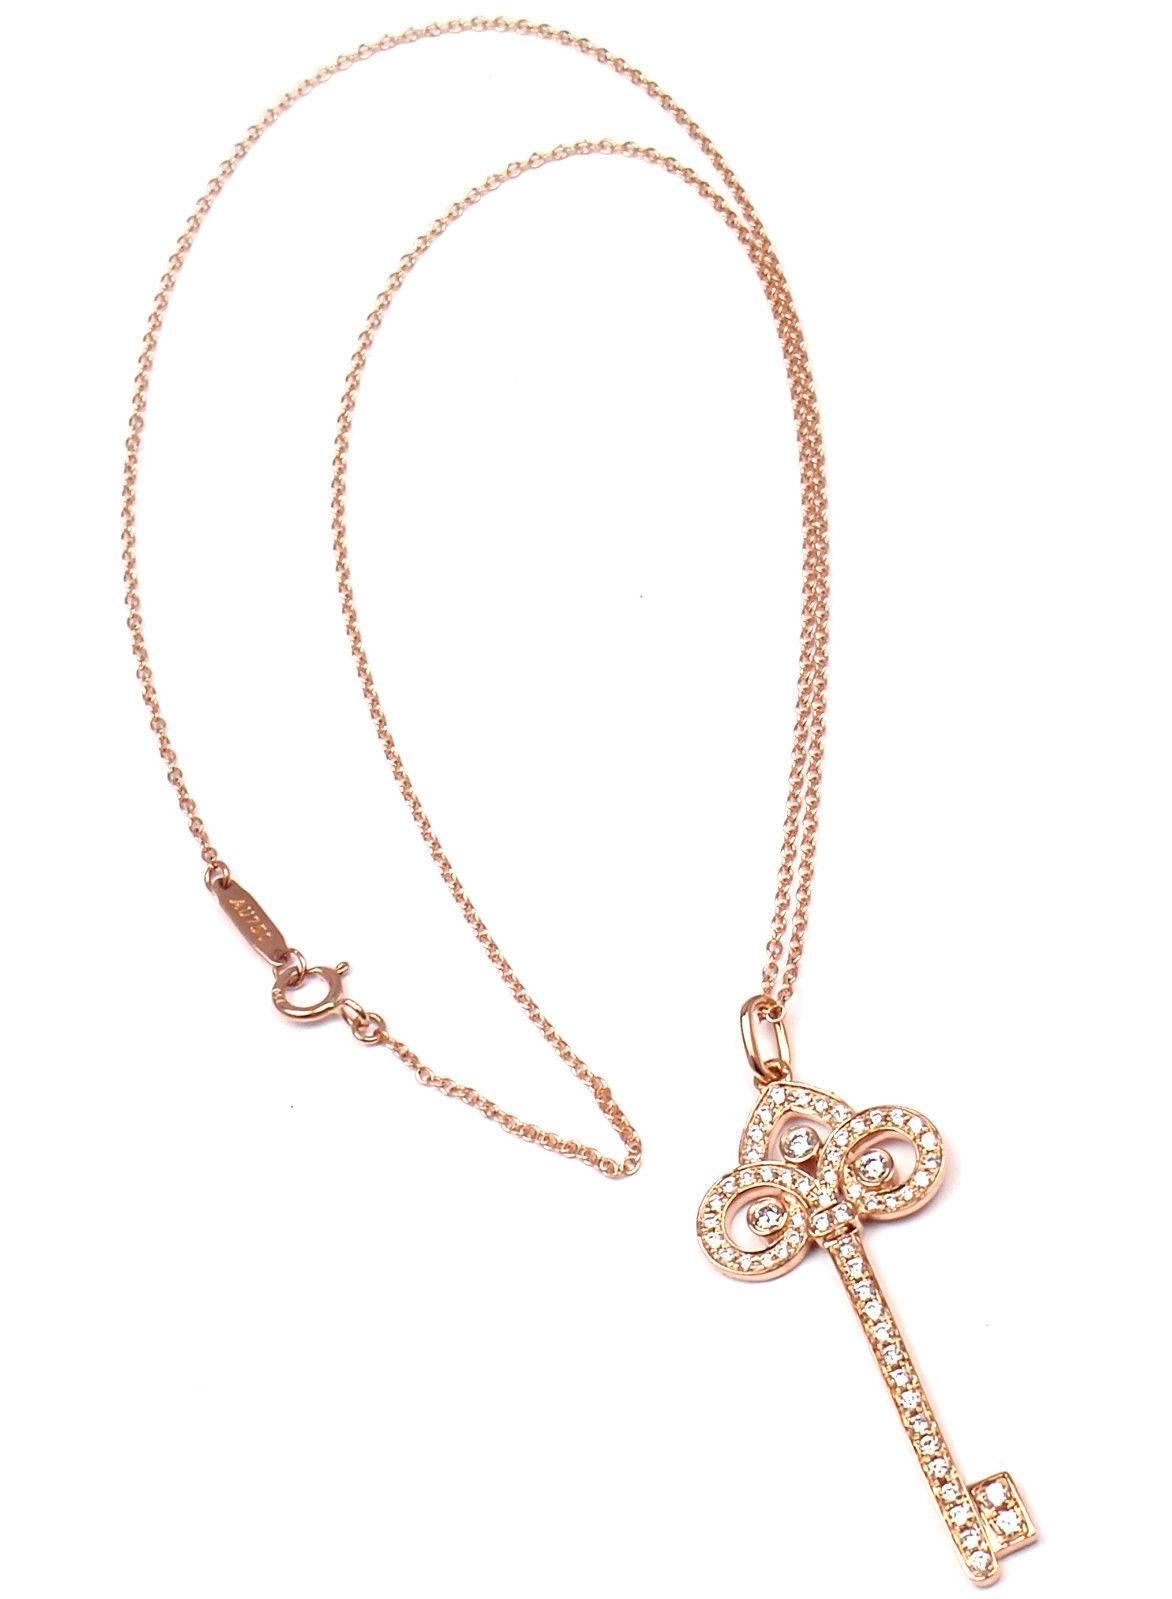 18k Rose Gold Diamond Fleur De Lis Diamond Key Pendant by Tiffany & Co.
With Round brilliant cut diamonds VS1 clarity, G color total weight approx. .40ct

Measurements:
Length: 16